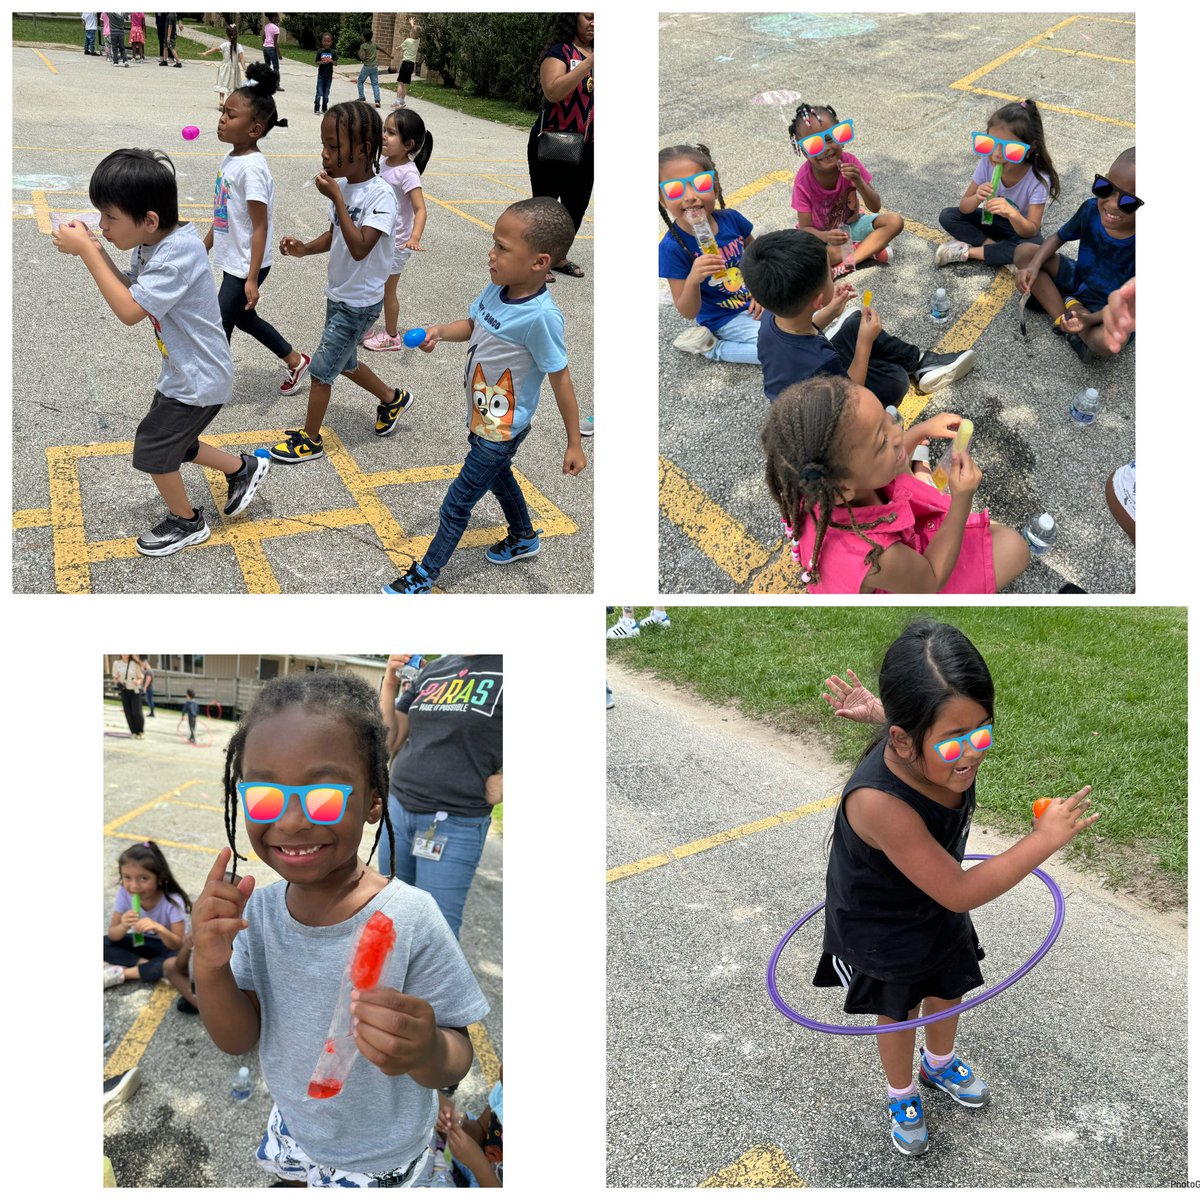 These students had a blast at PK Field Day! #BubbleDancing #EggRaces #ChalkTime #HulaHoopFun #RingToss @FelderTamera @NatashaJernagin @CarrieAnneEd